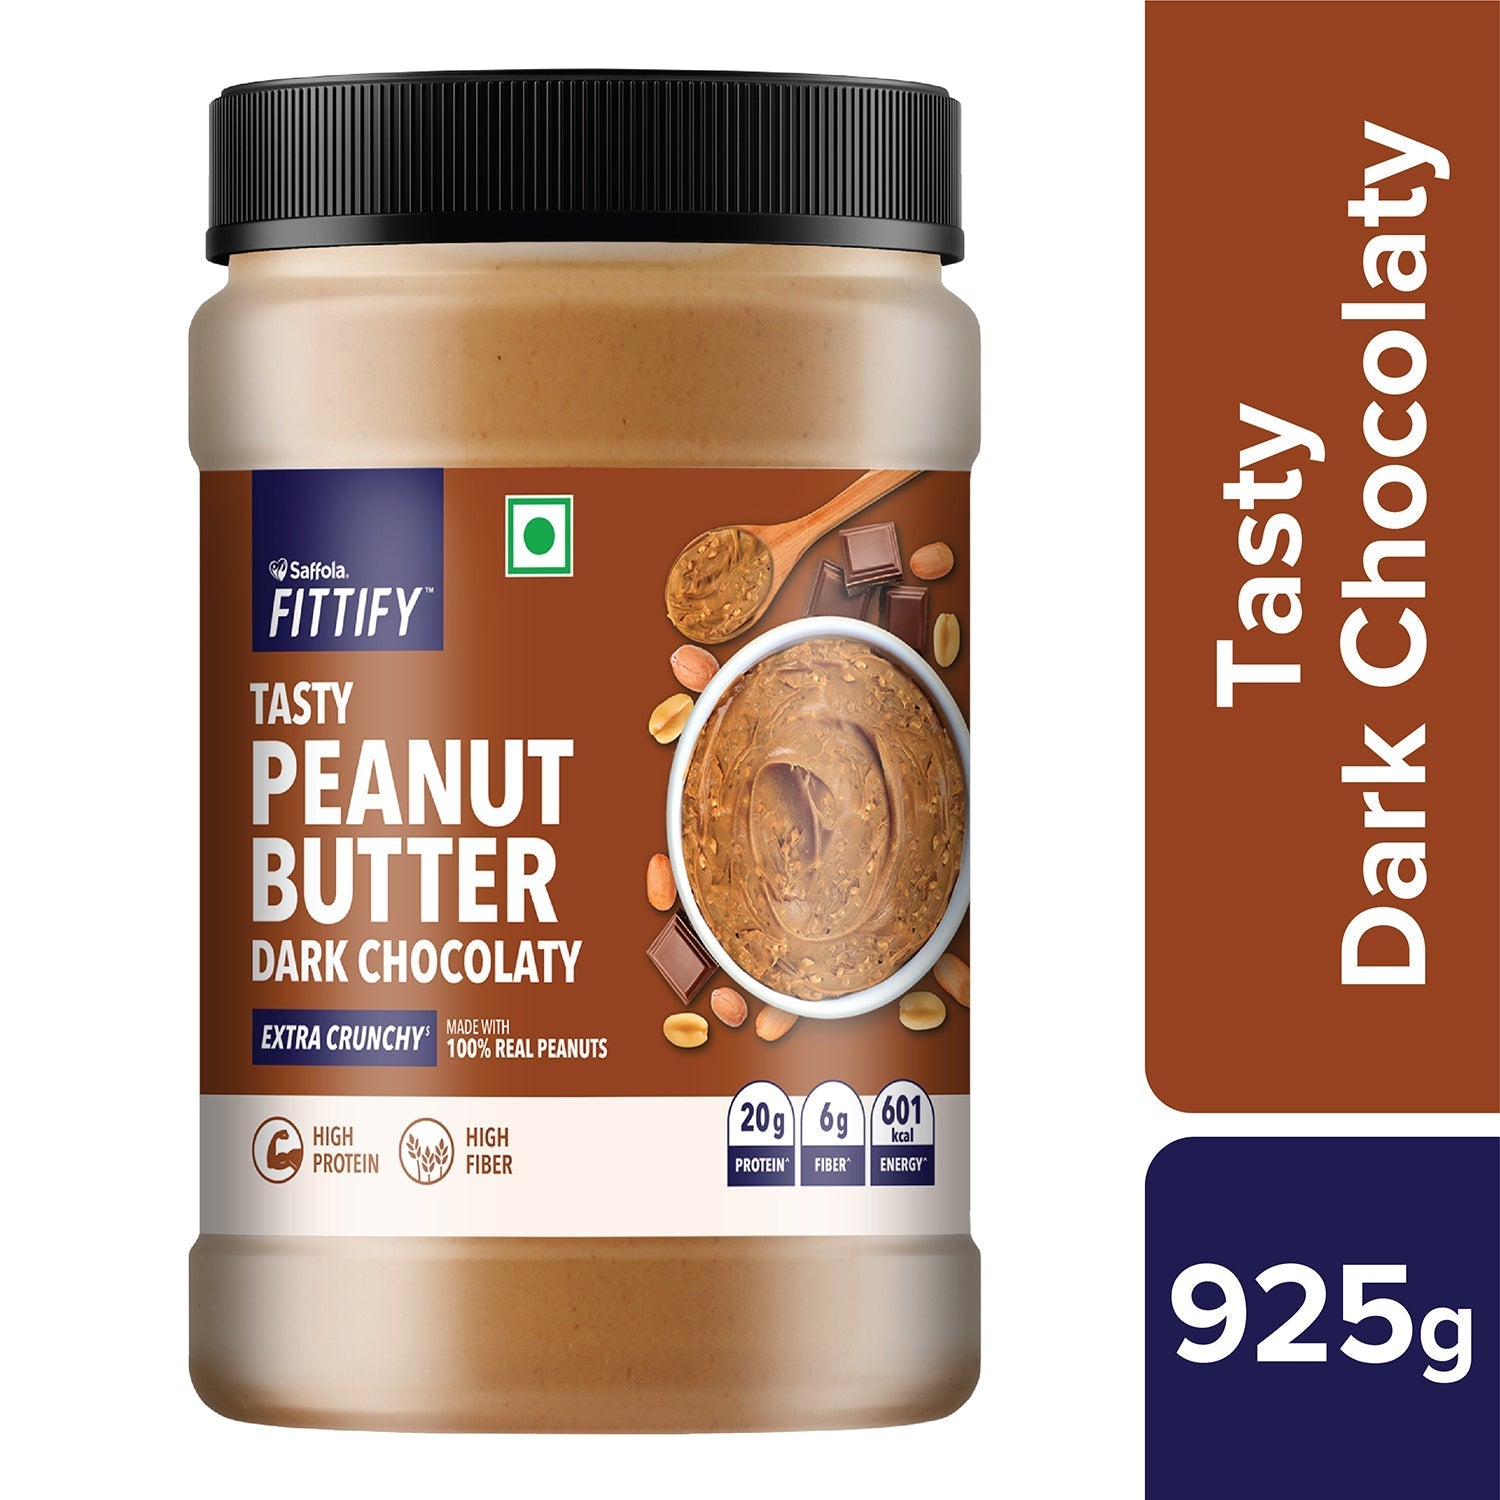 Saffola Fittify Tasty - Dark Chocolaty - Peanut Butter (Pack of 2)